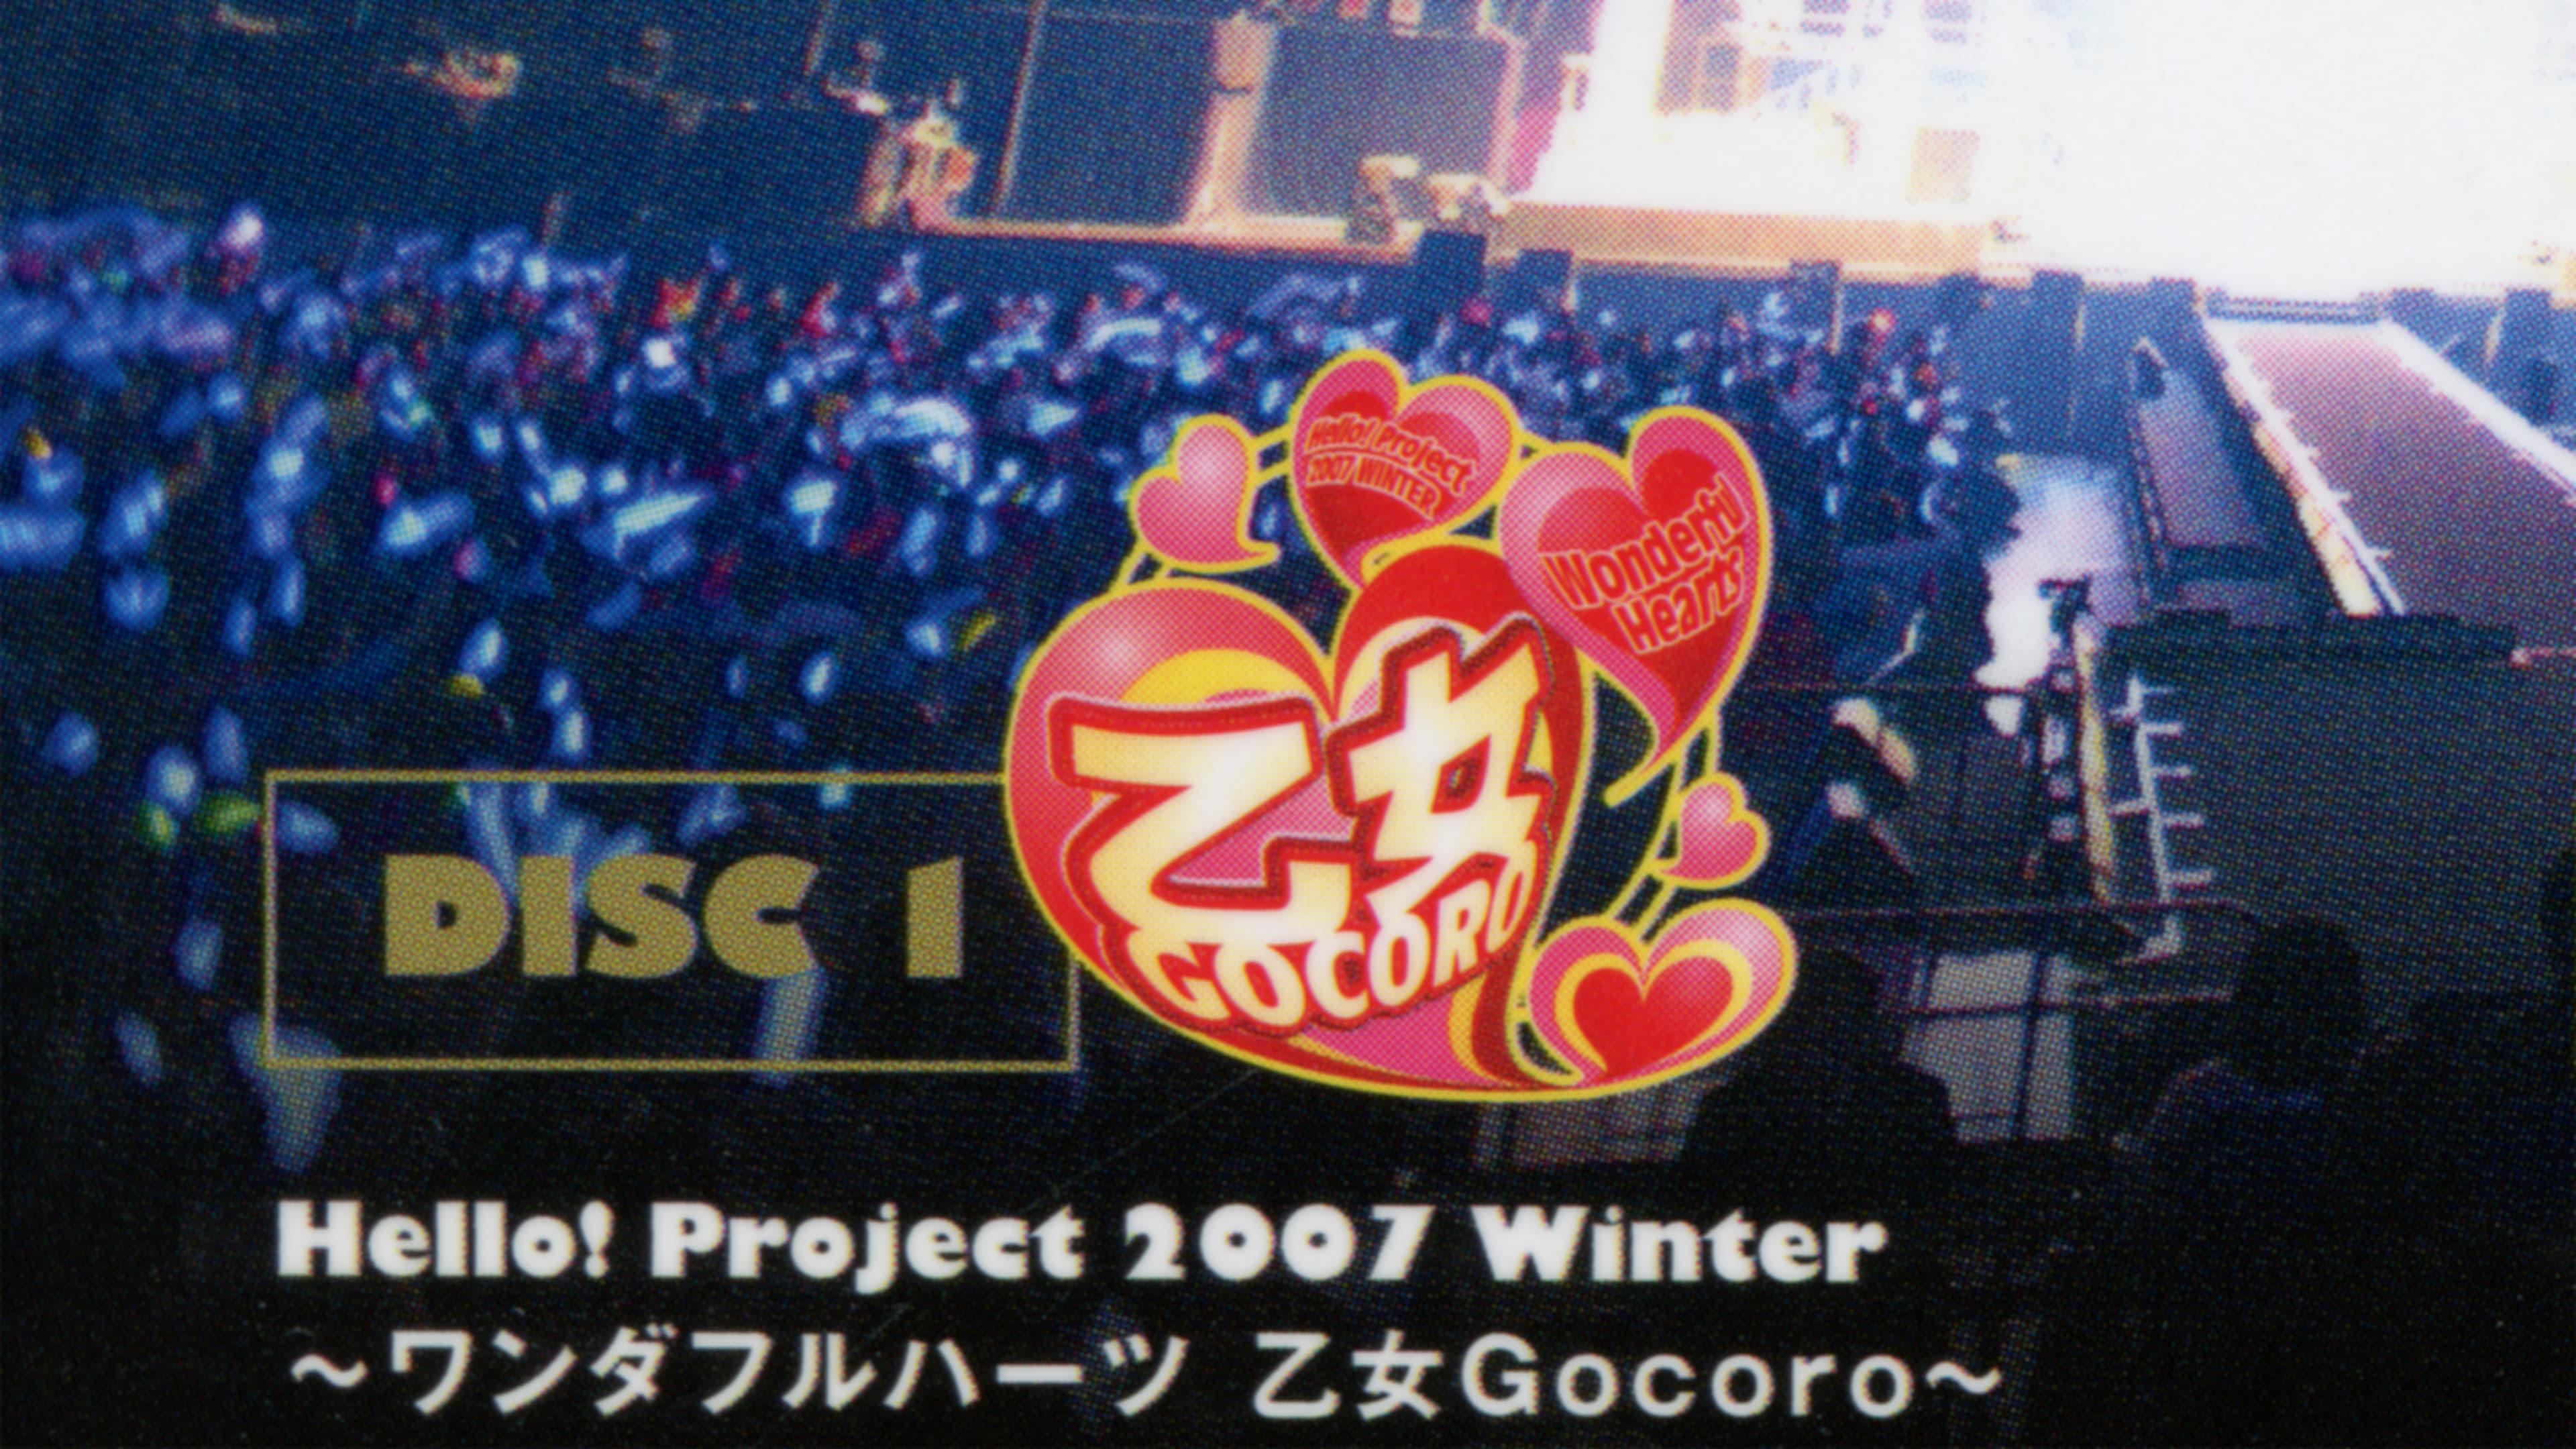 Hello! Project 2007 Winter ~Wonderful Hearts Otome Gocoro~ backdrop